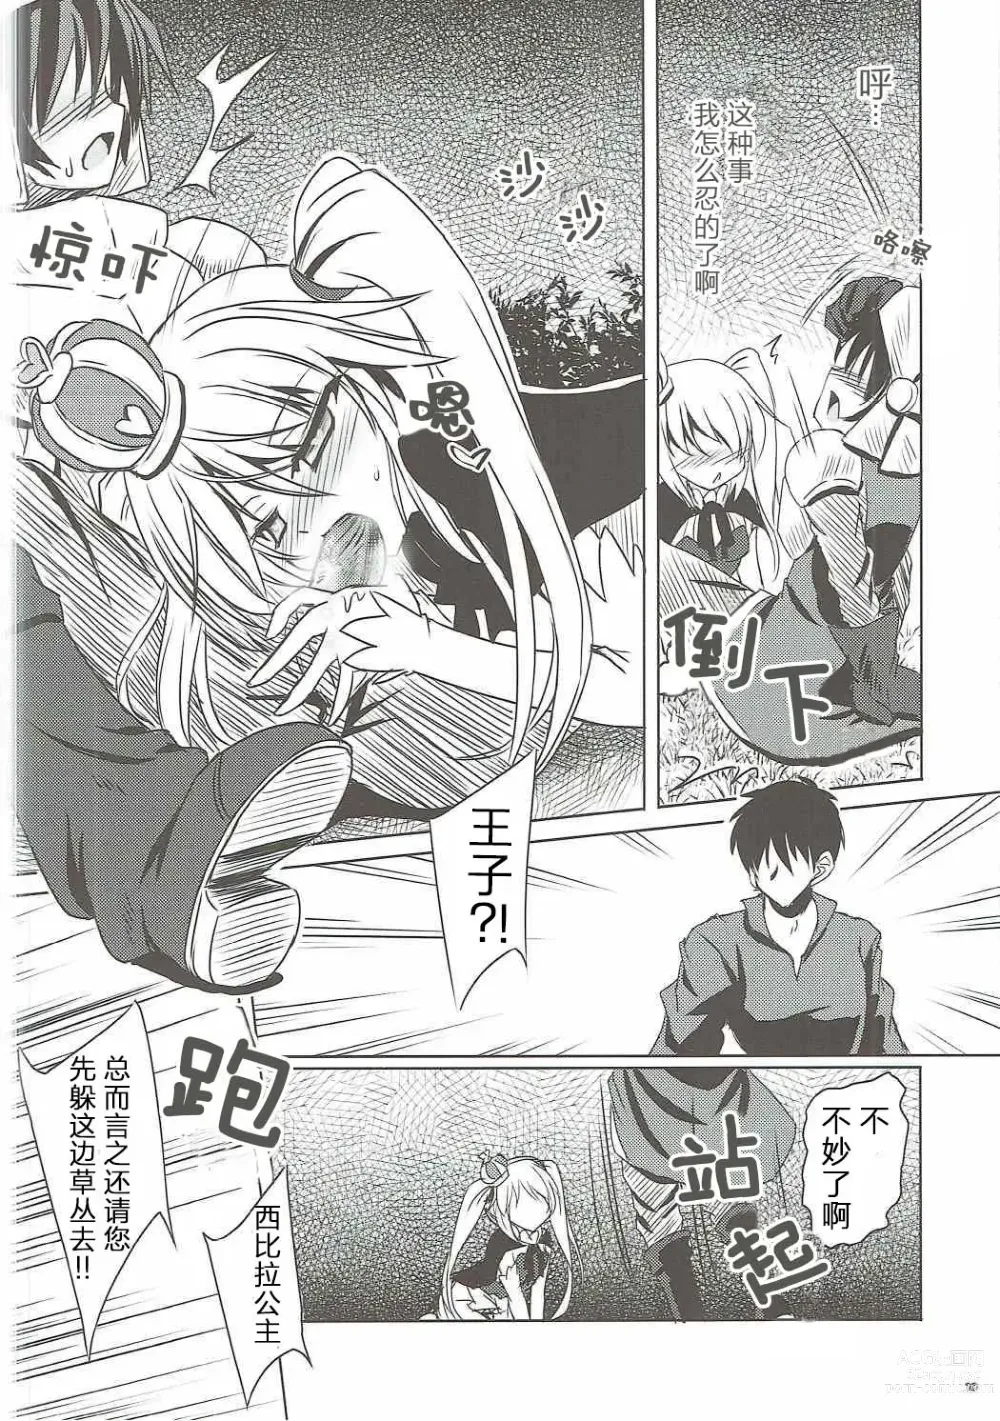 Page 9 of doujinshi 于暗夜徘徊的王国公主